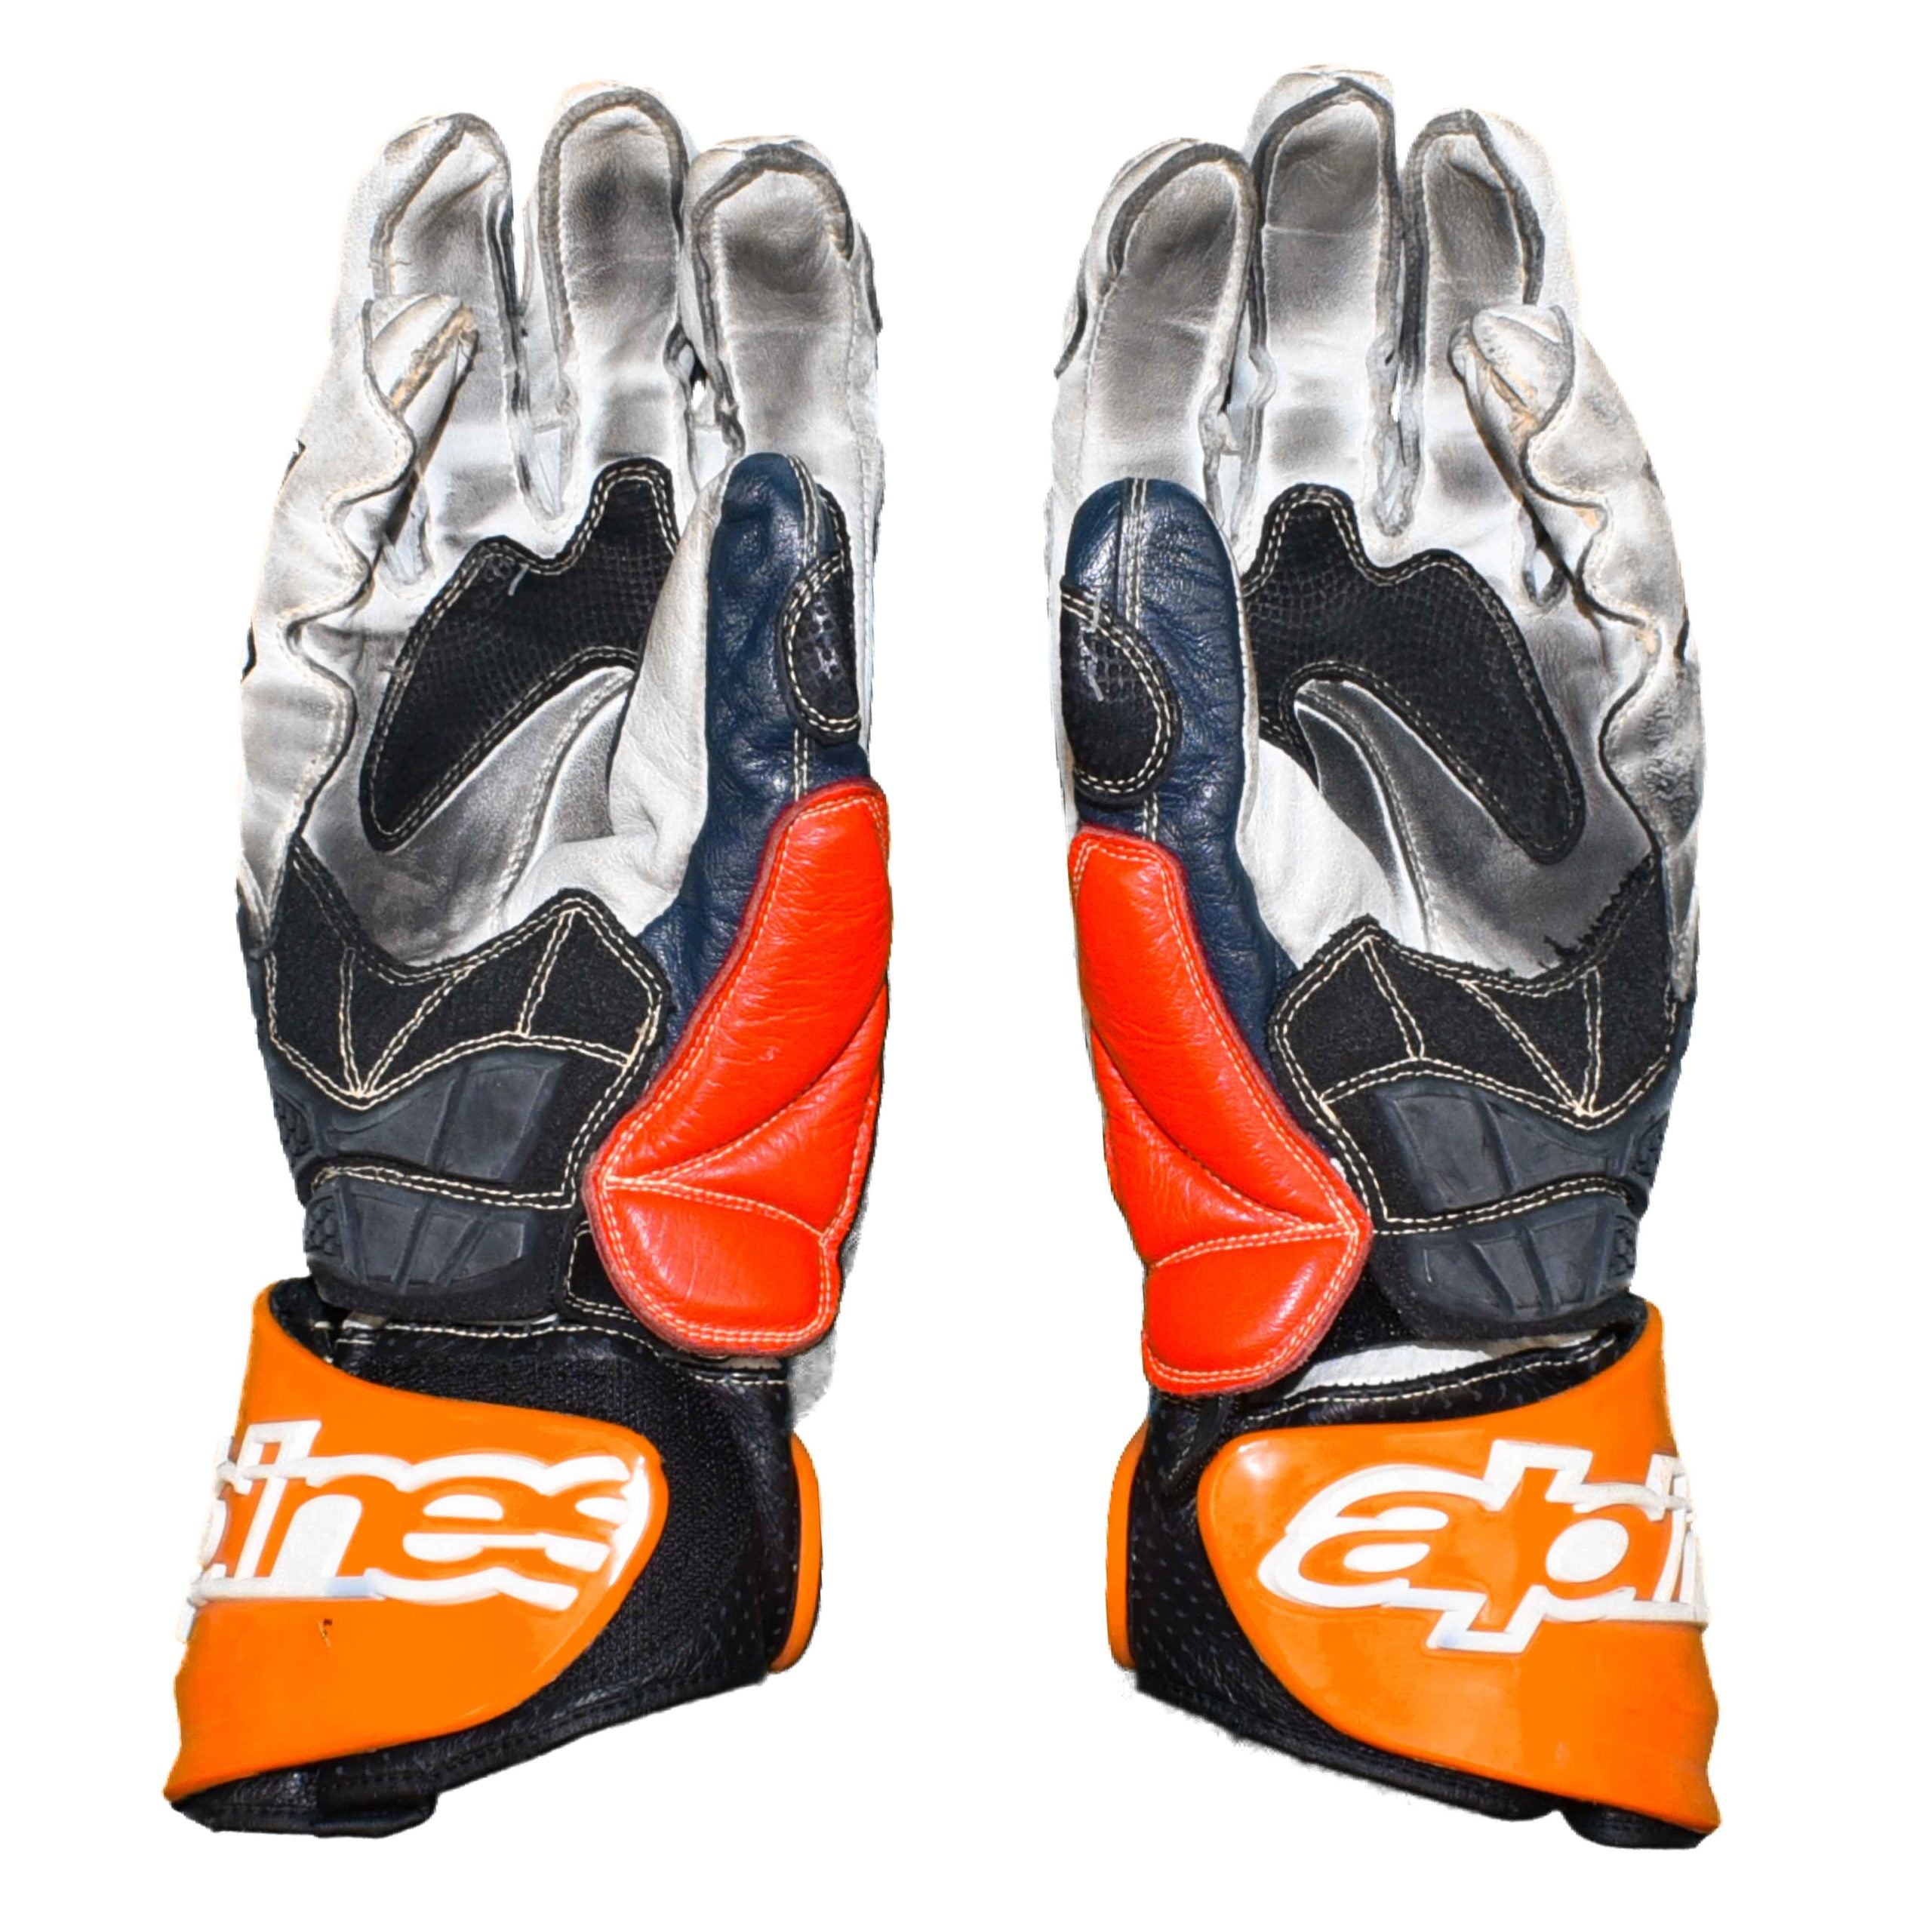 2004 Nicky Hayden Signed Race Used Repsol Honda MotoGP Gloves